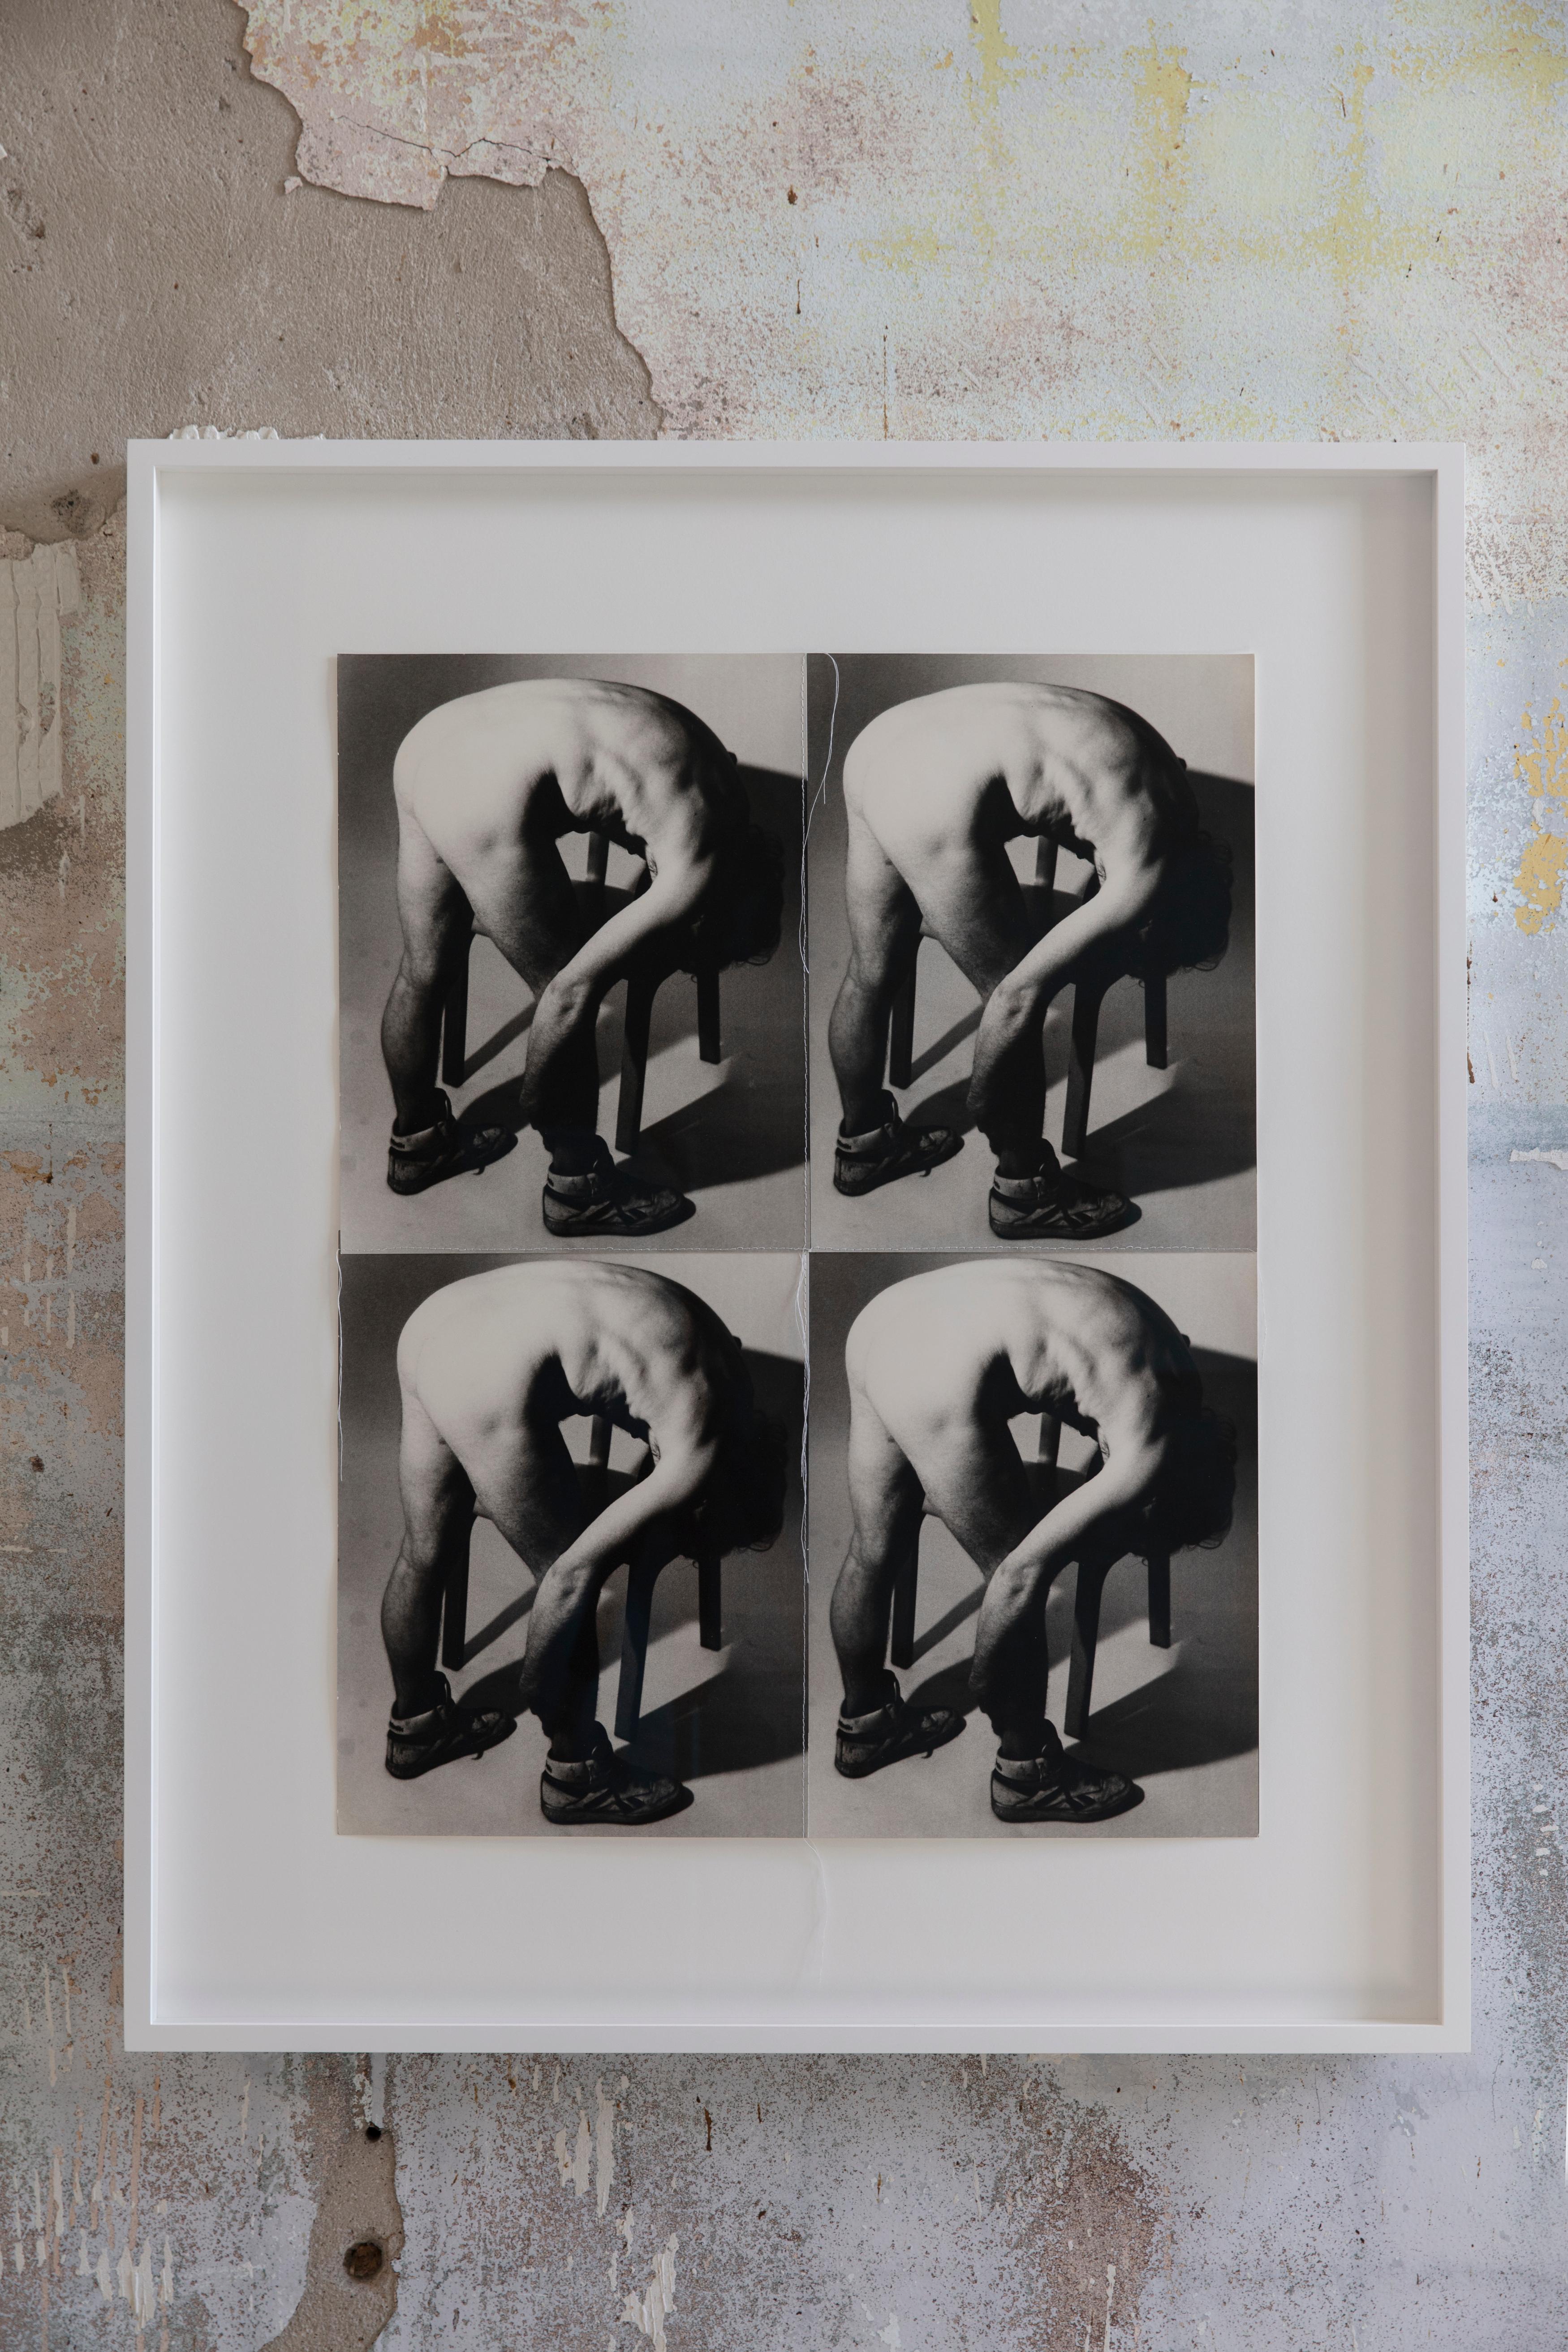 Quatre tirages gélatino-argentiques d'un nu masculin par Andy Warhol